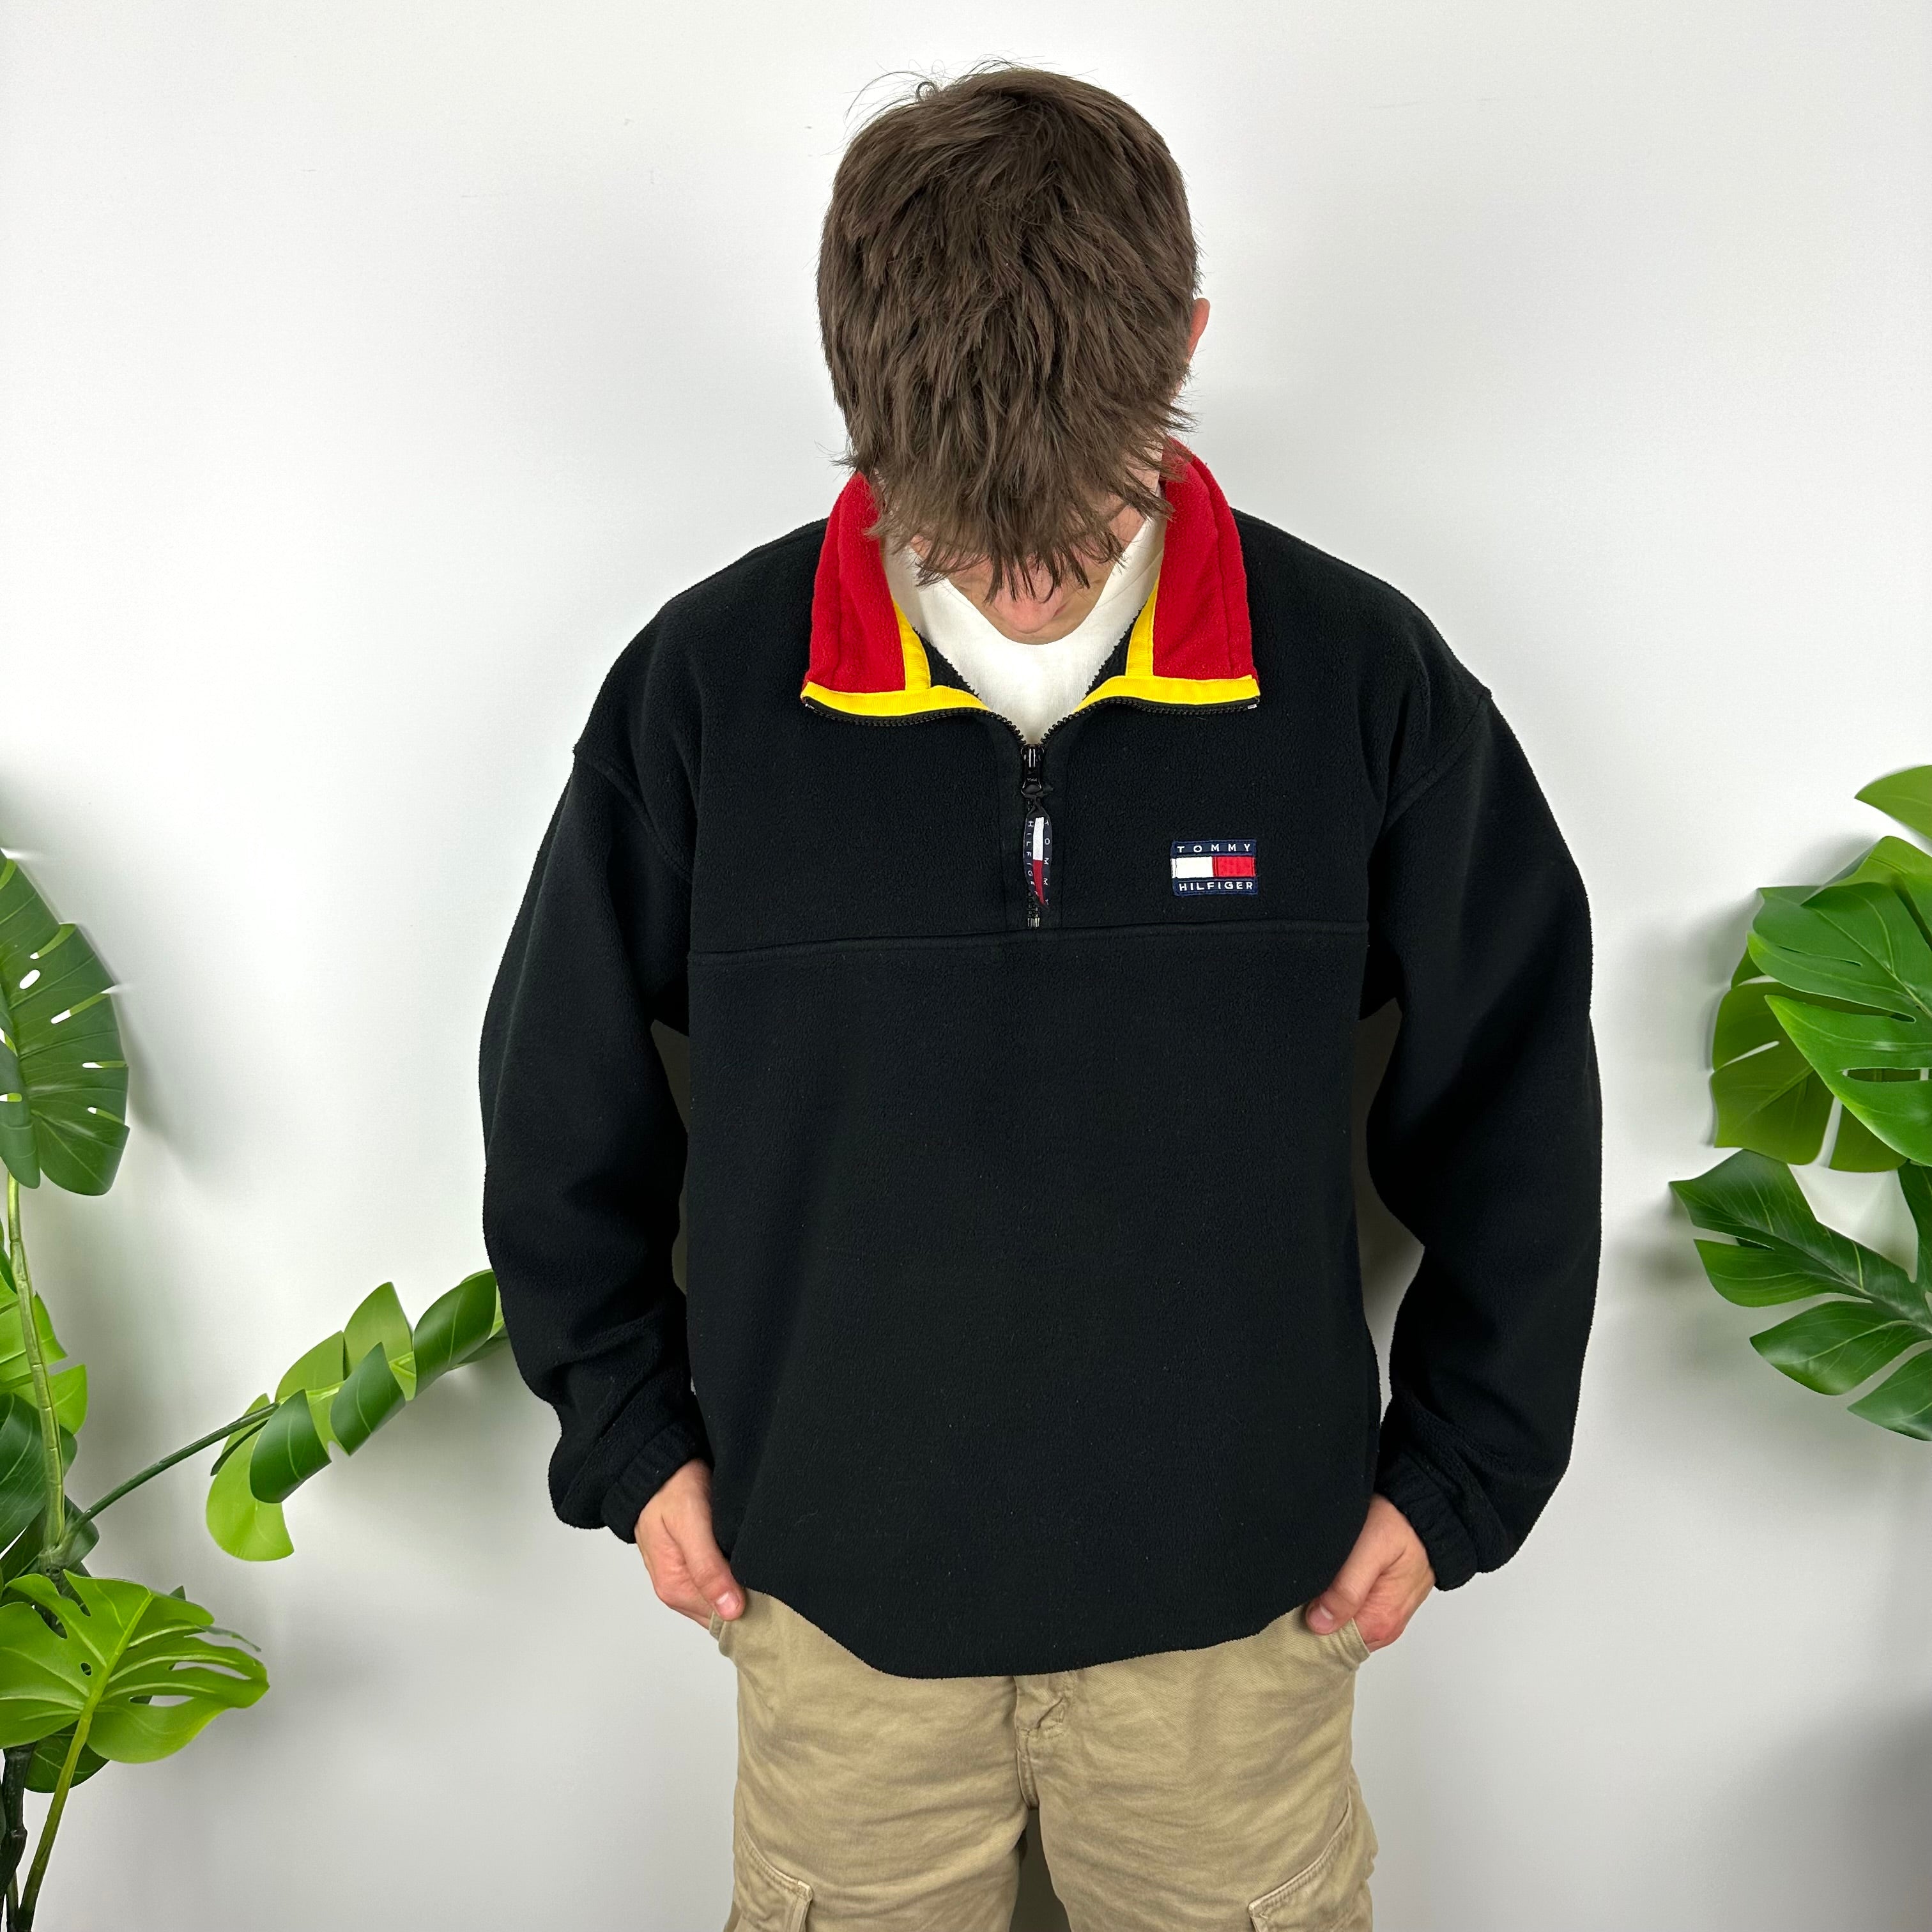 Tommy Hilfiger Black Embroidered Spell Out Teddy Bear Fleece Quarter Zip Sweatshirt (XL)